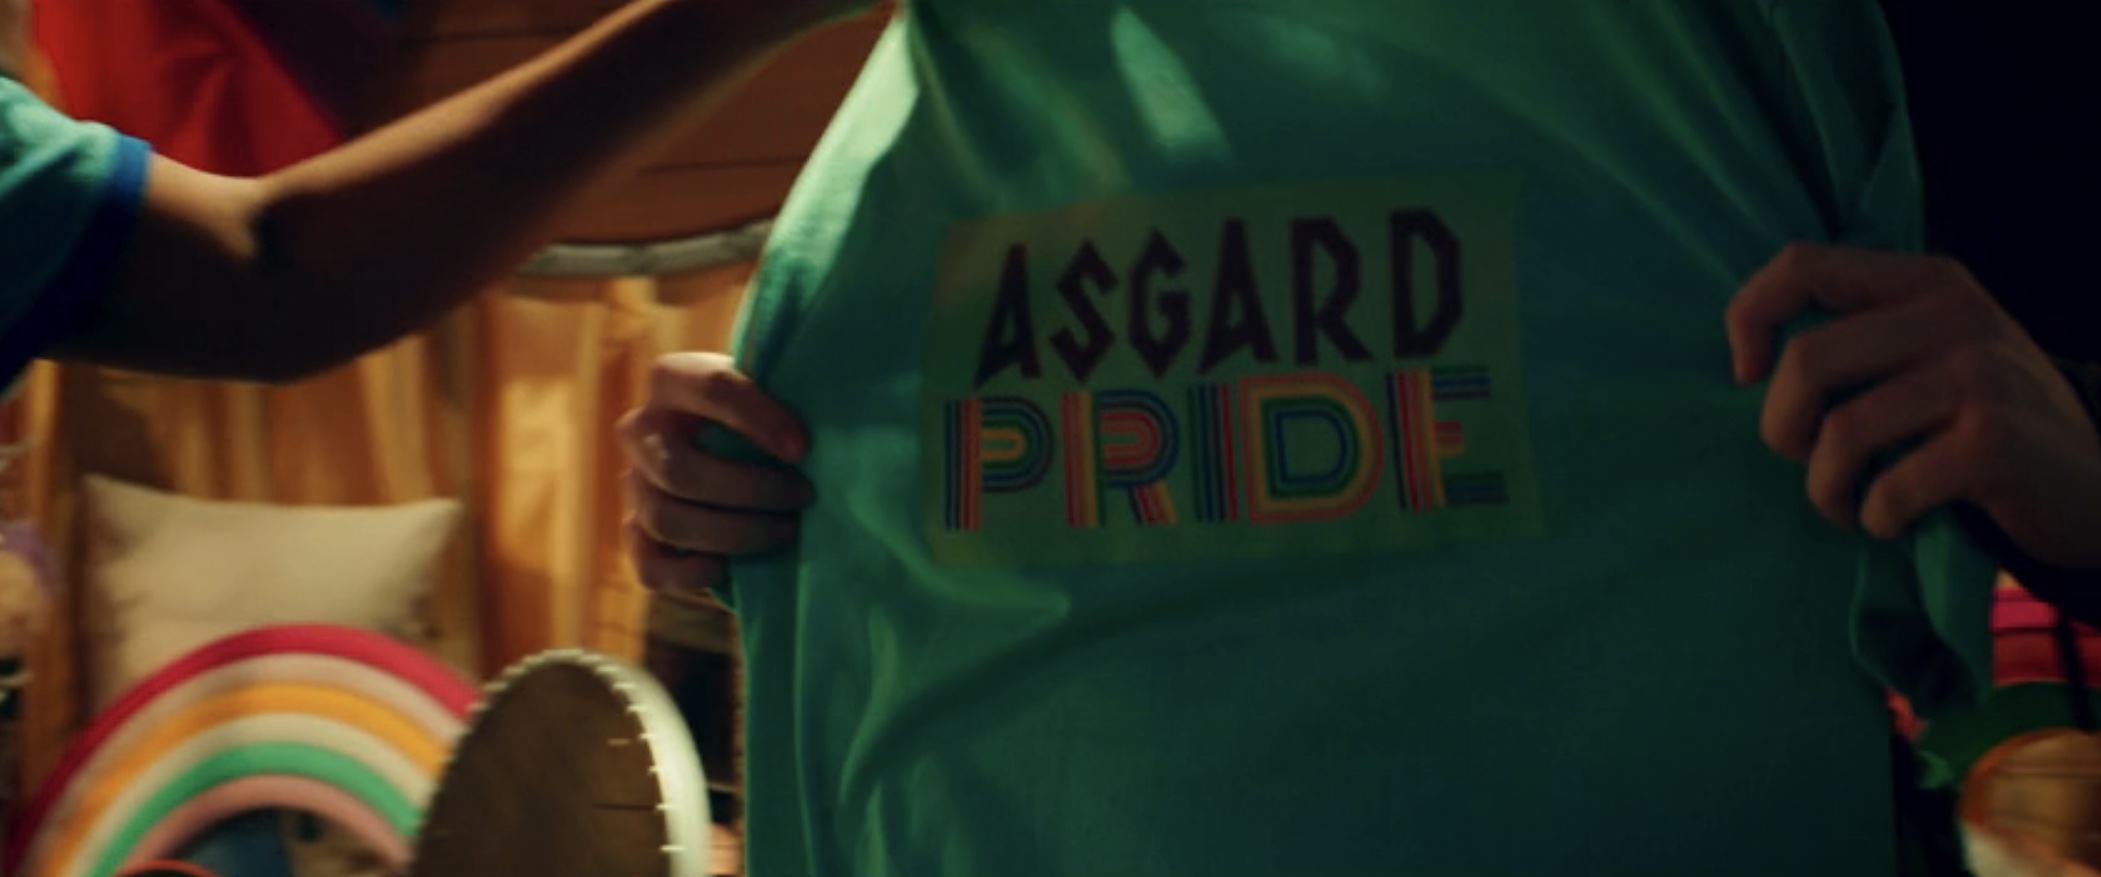 Asgard Pride